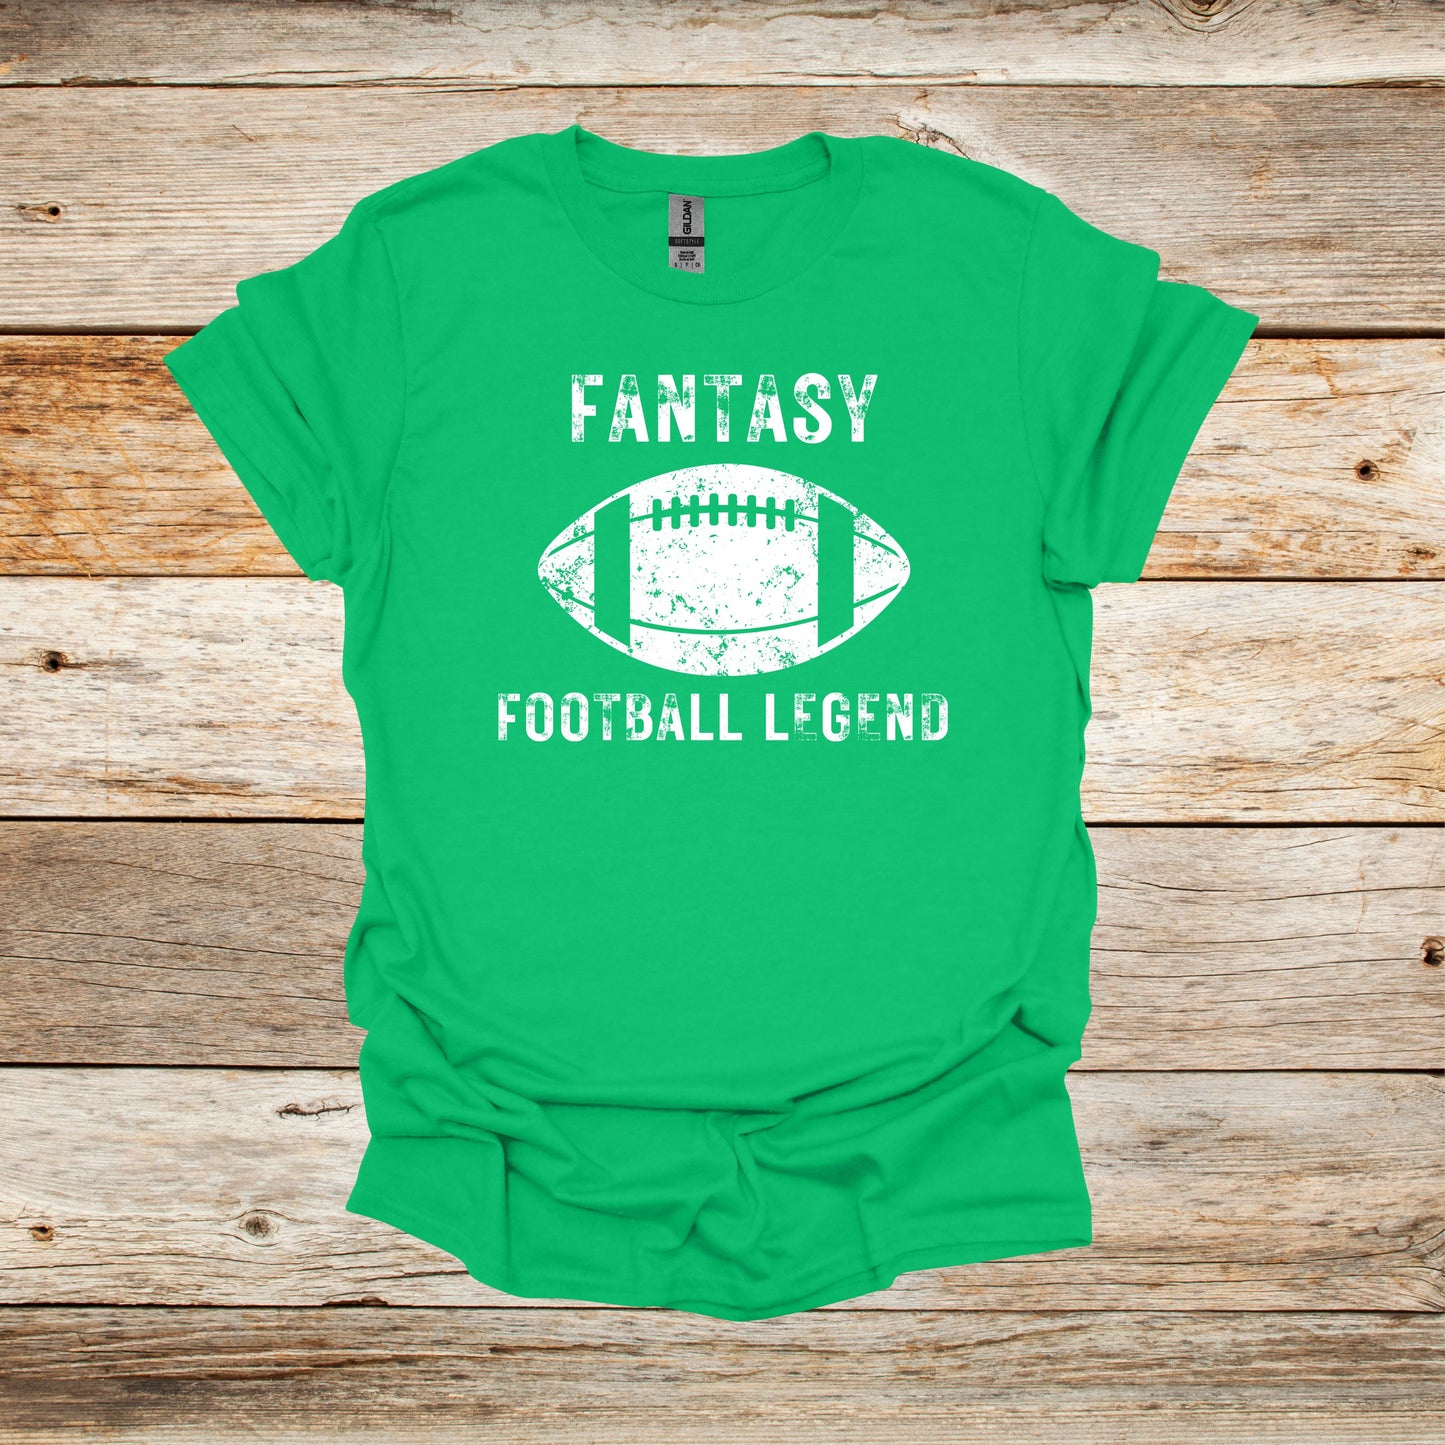 Football T-Shirt - Adult and Children's Tee Shirts - Fantasy Football - Sports T-Shirts Graphic Avenue Irish Green Adult Small 